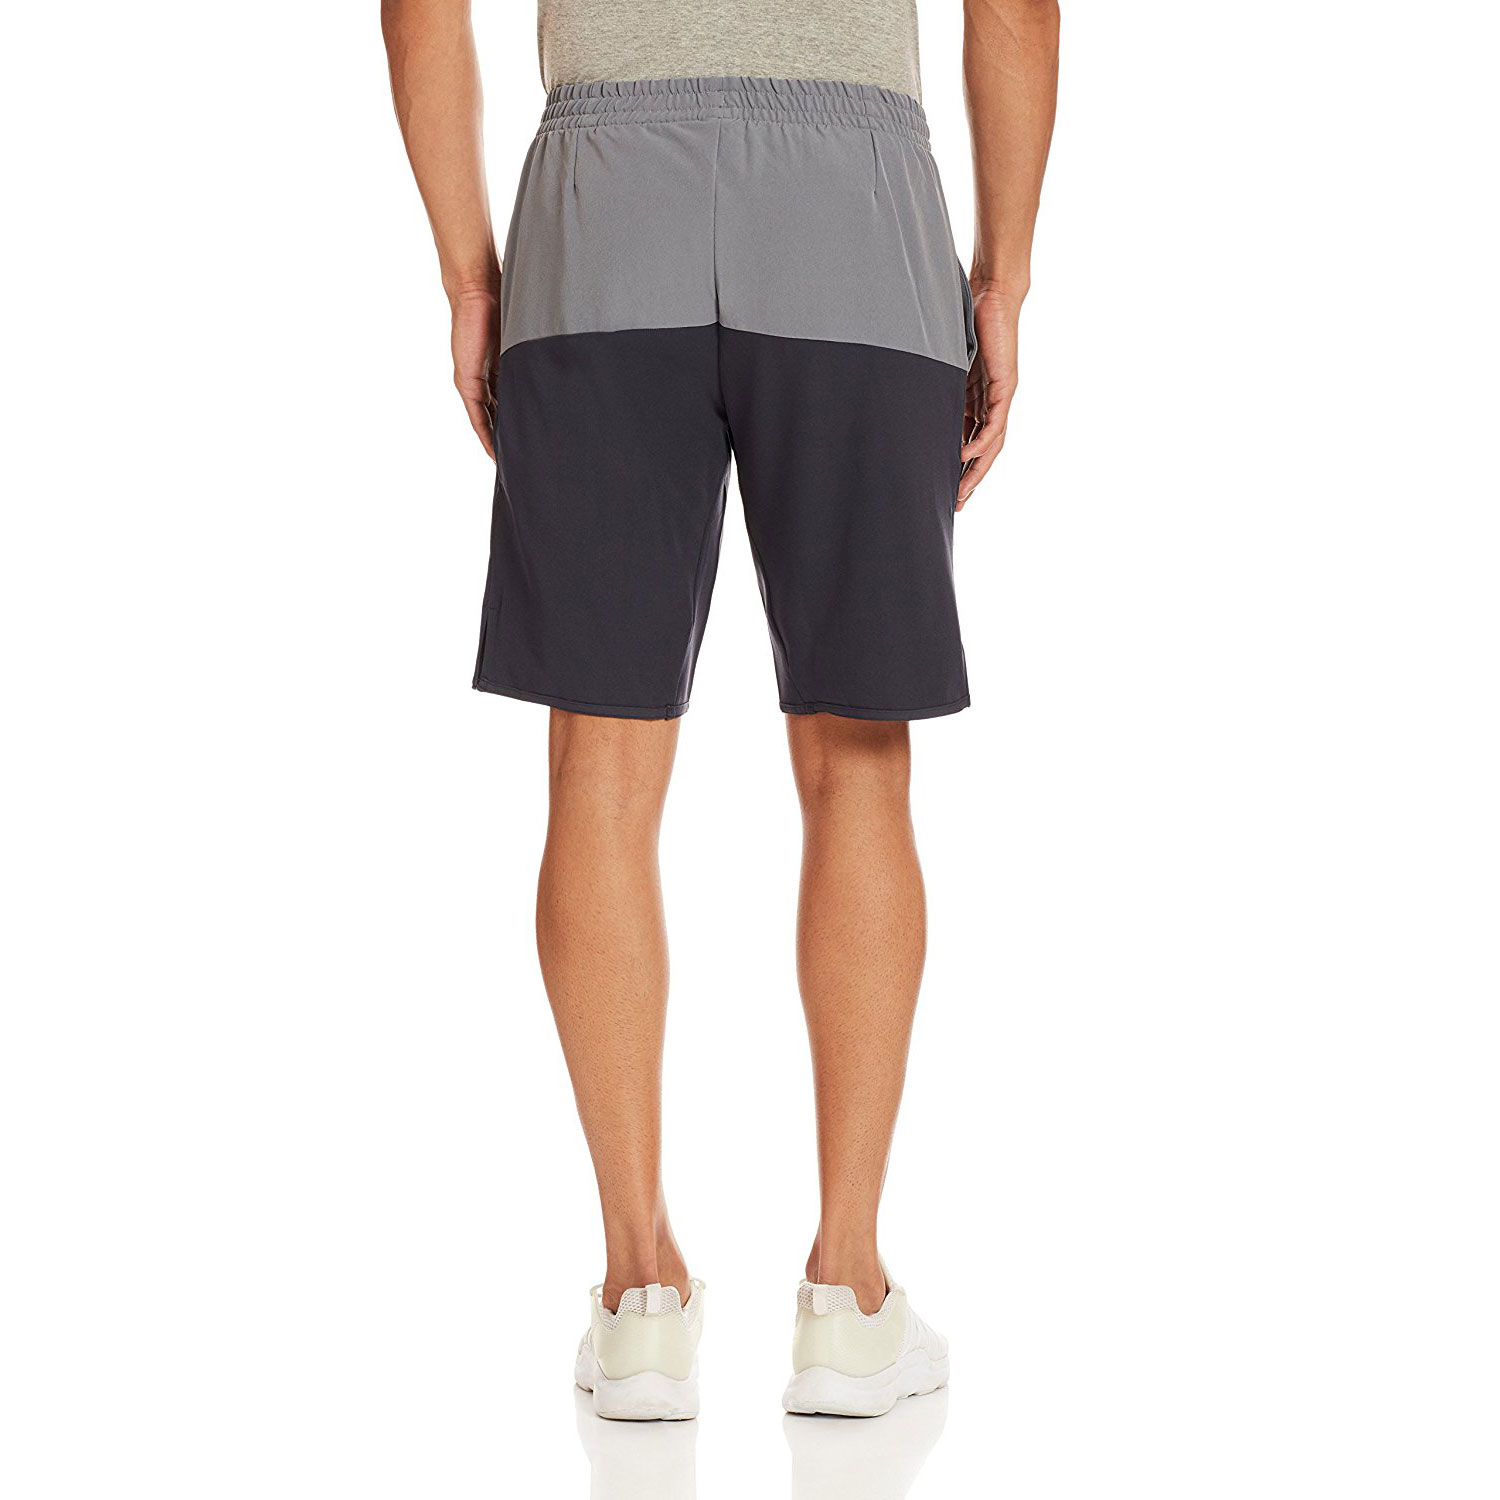  Adidas Men's Shorts